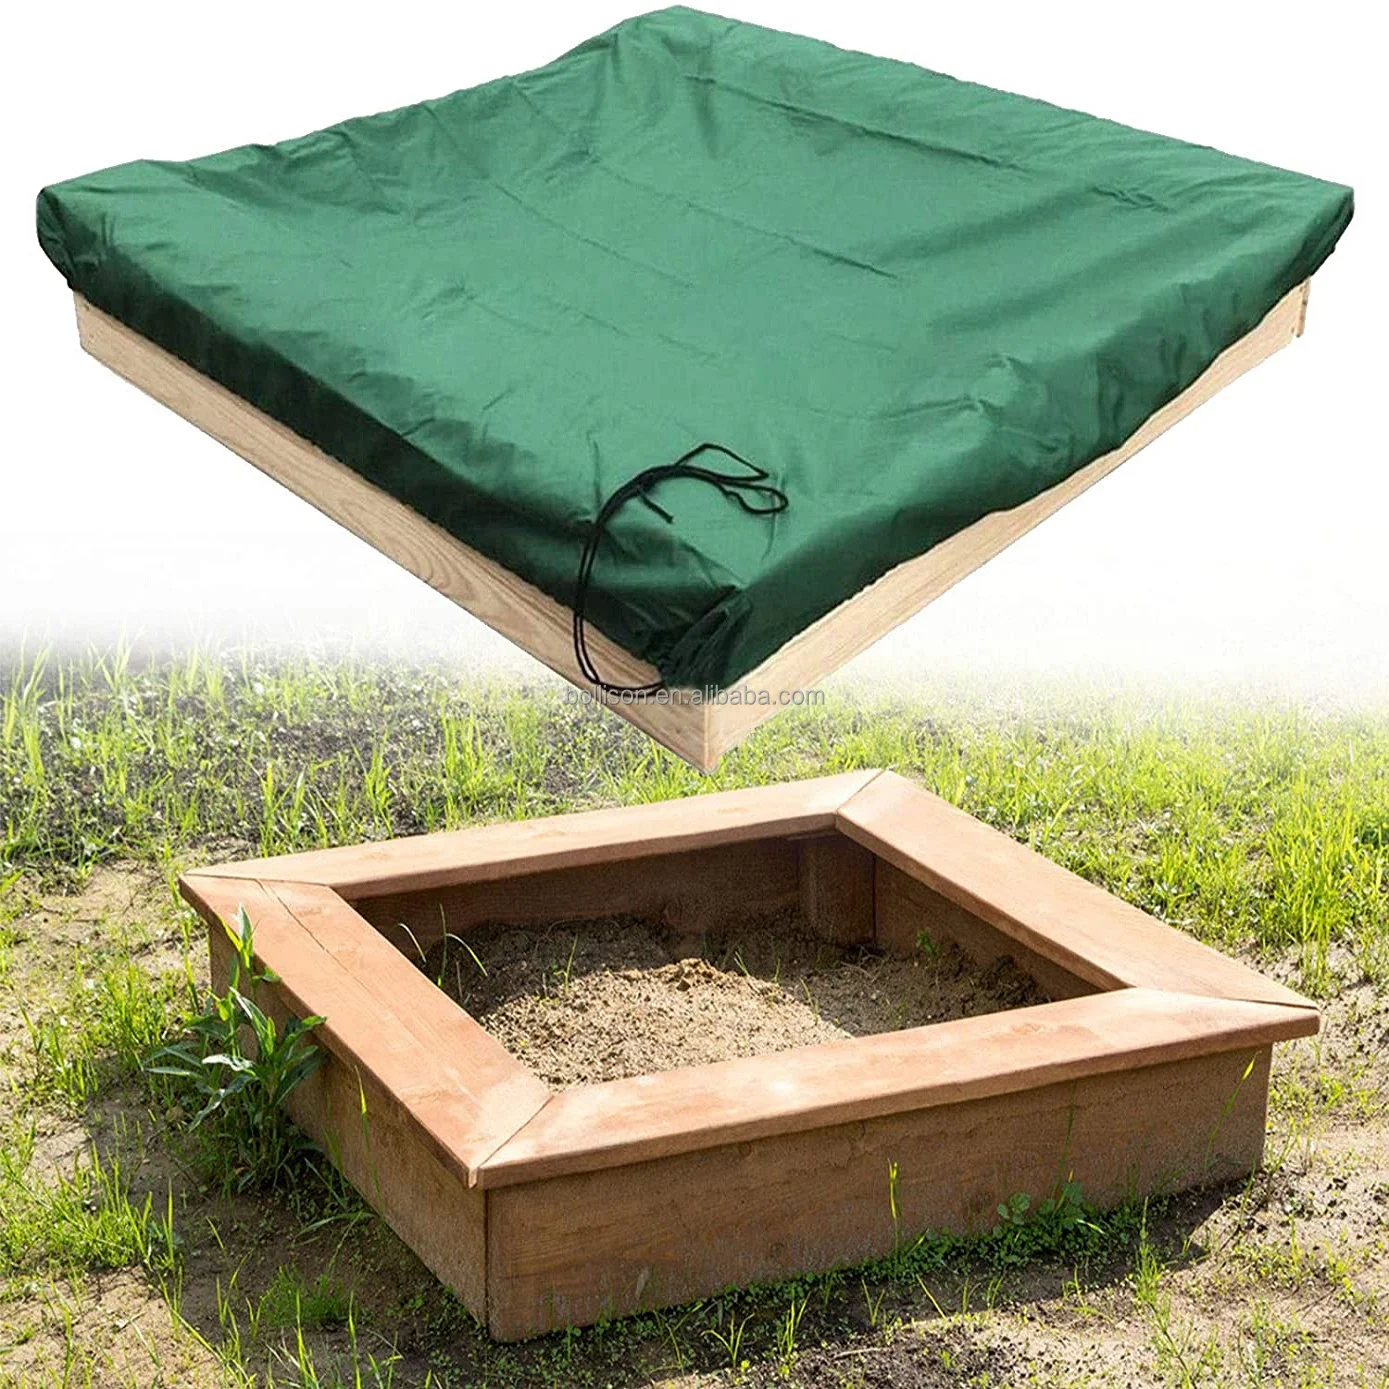 Oslimea Sandbox Cover with Drawstring Waterproof Sandpit Pool Cover Green 47.24 x 47.24, Black Square Dustproof Protection Beach Sandbox Canopy 